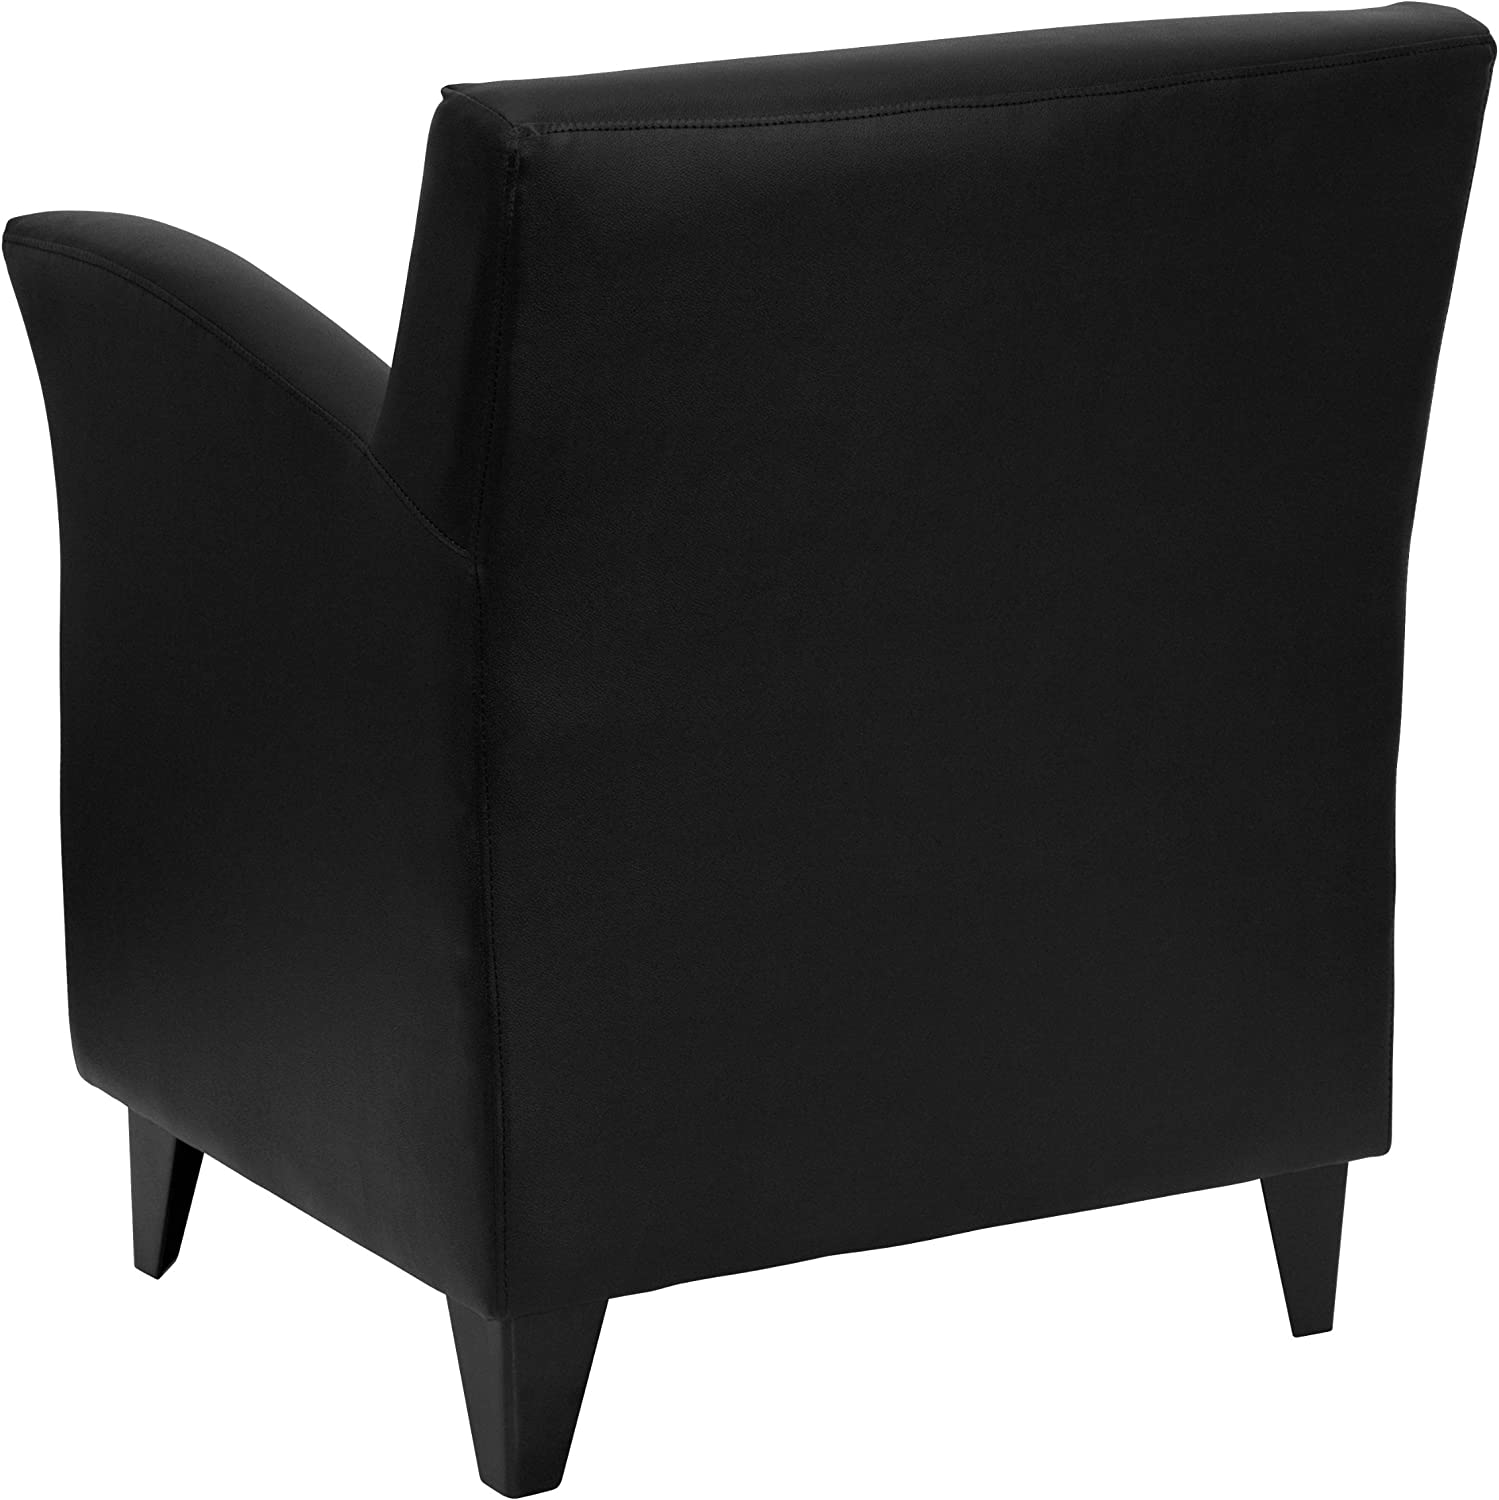 Flash Furniture HERCULES Roman Series Black LeatherSoft Lounge Chair